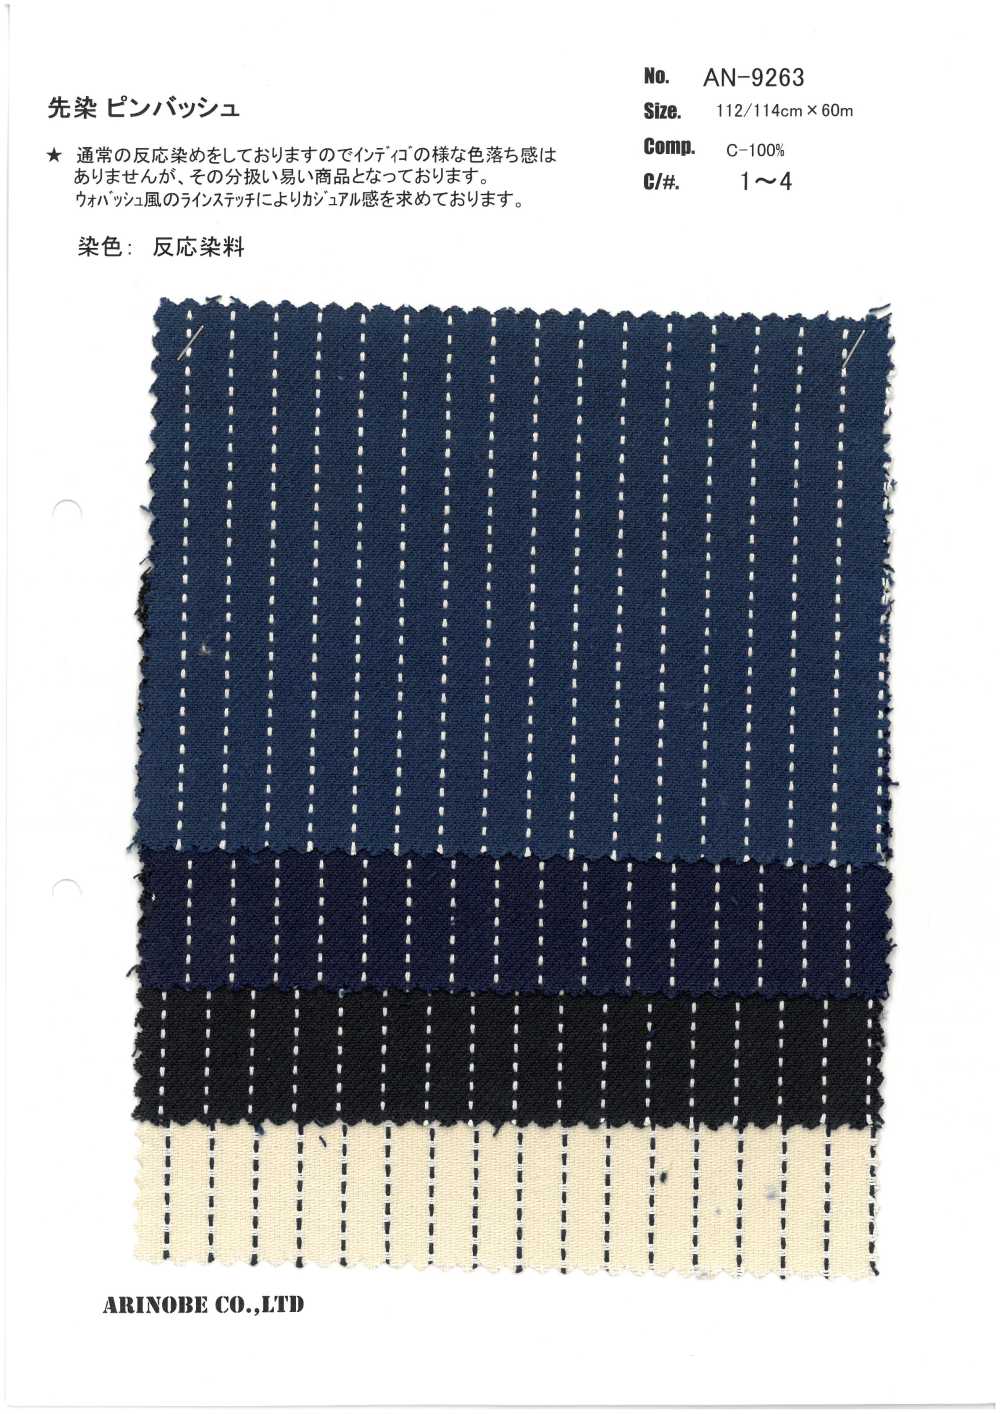 AN-9263 Pin Bash Teint En Fil[Fabrication De Textile] ARINOBE CO., LTD.